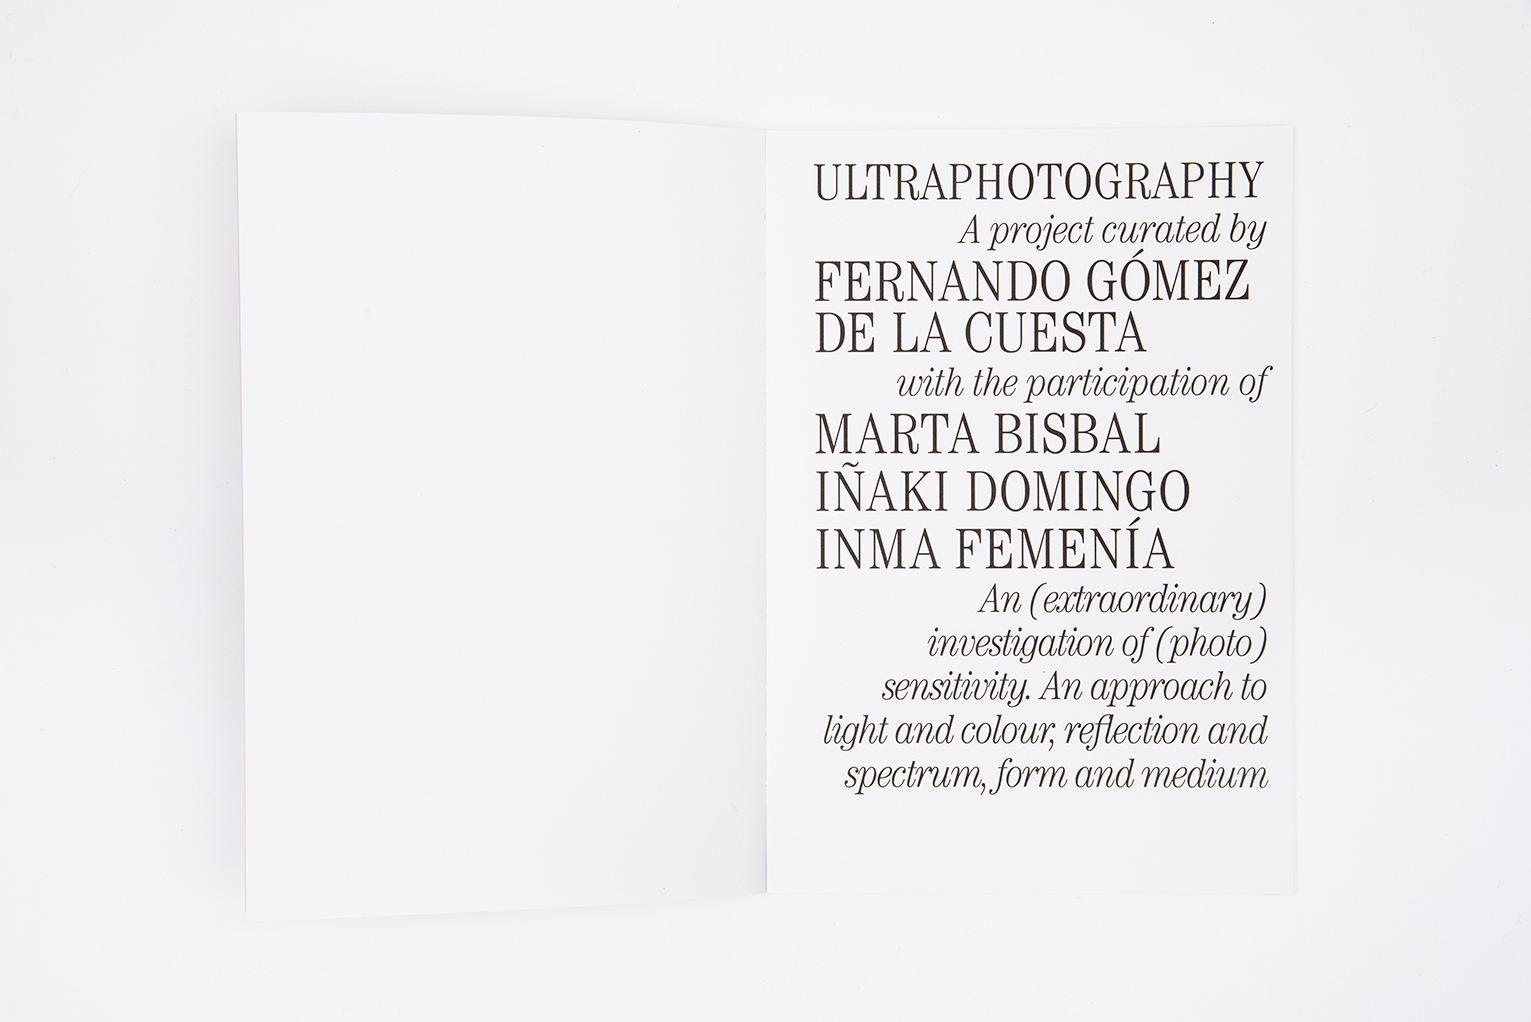 Ultrafotografia-catalogue-centro-parraga-inma-femenia